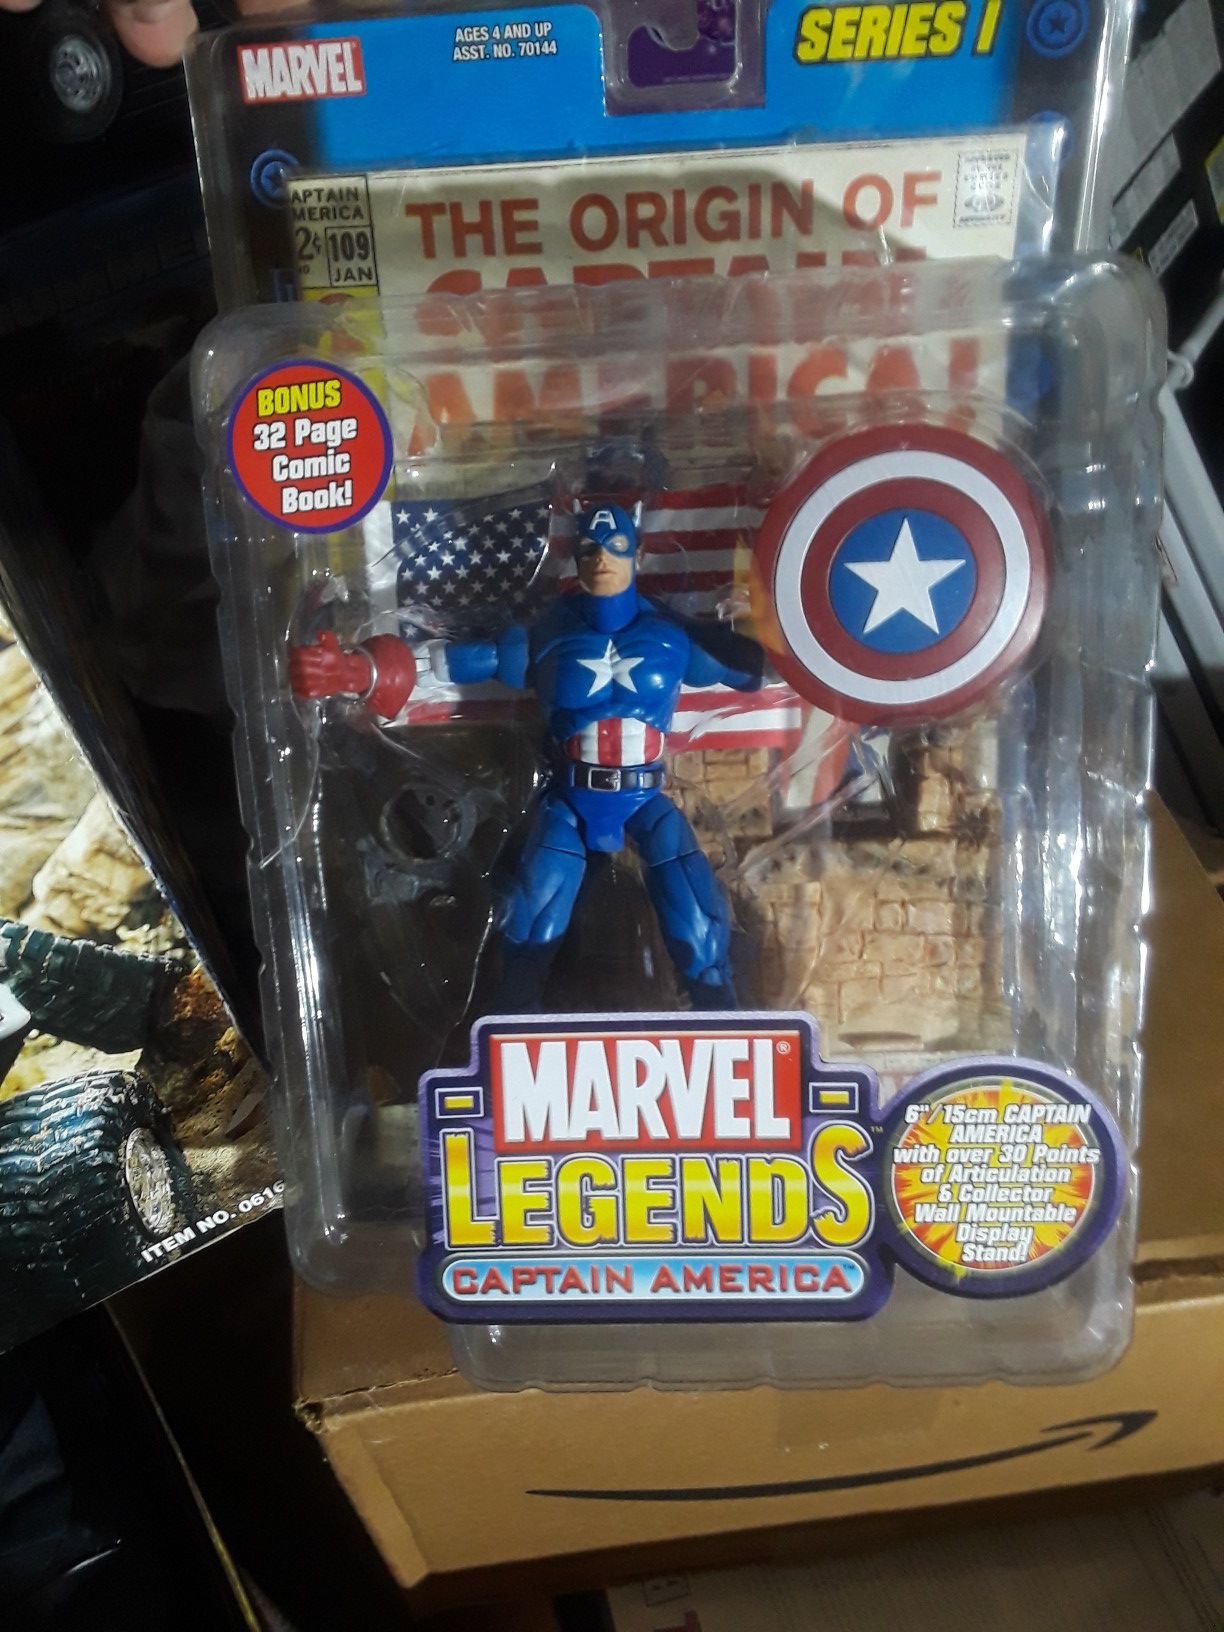 Marvel legends: captain America